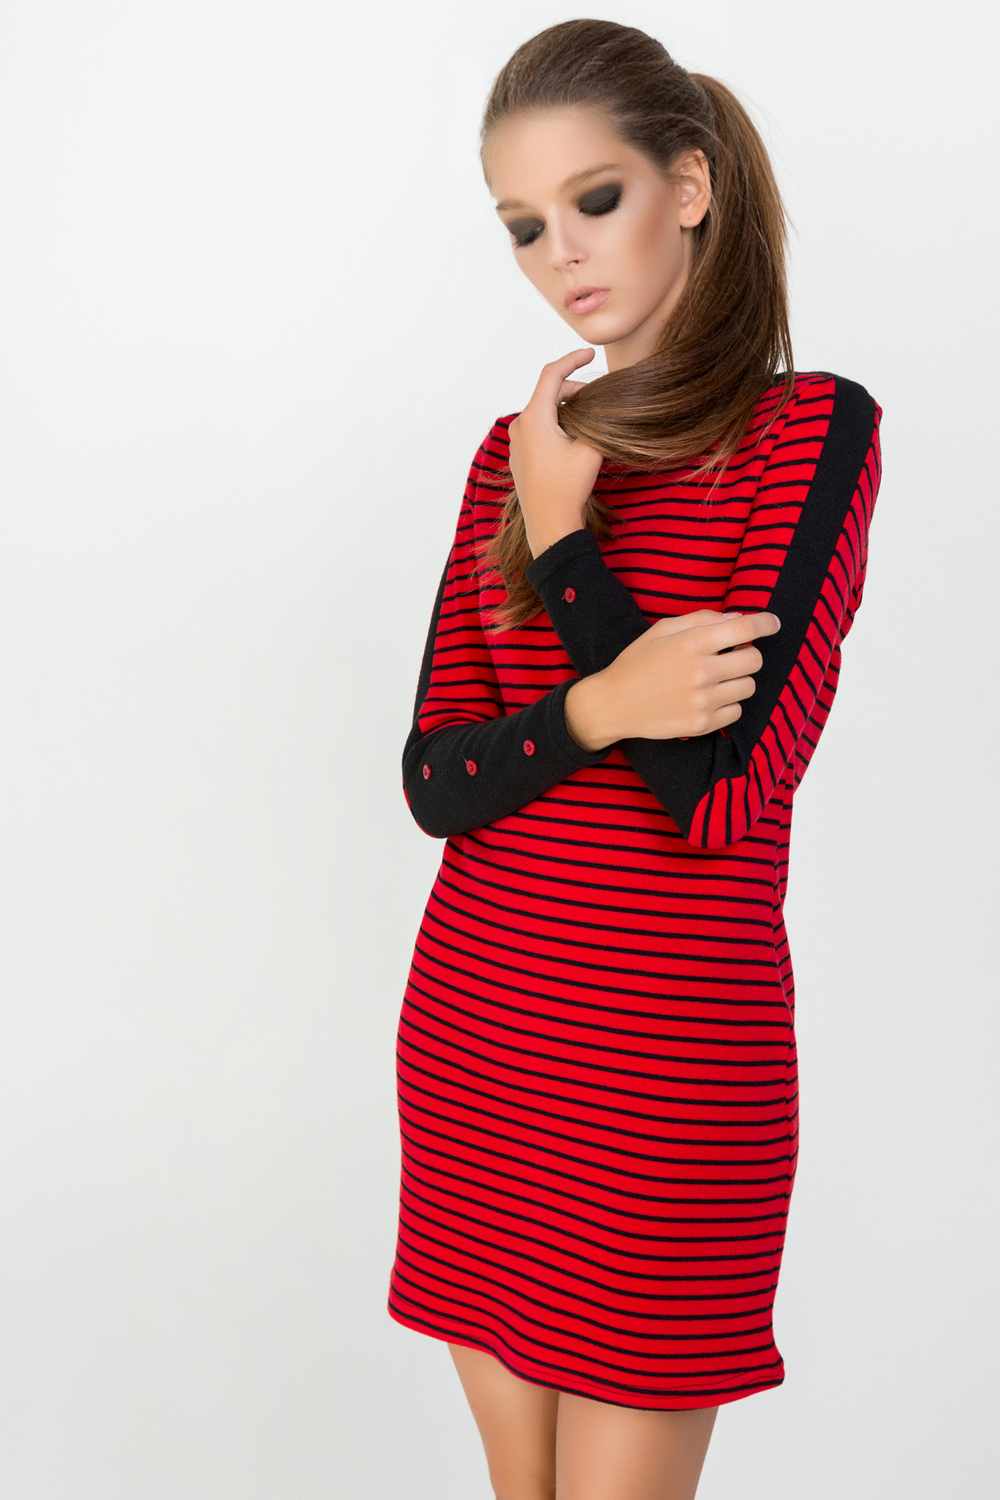 Red striped dress